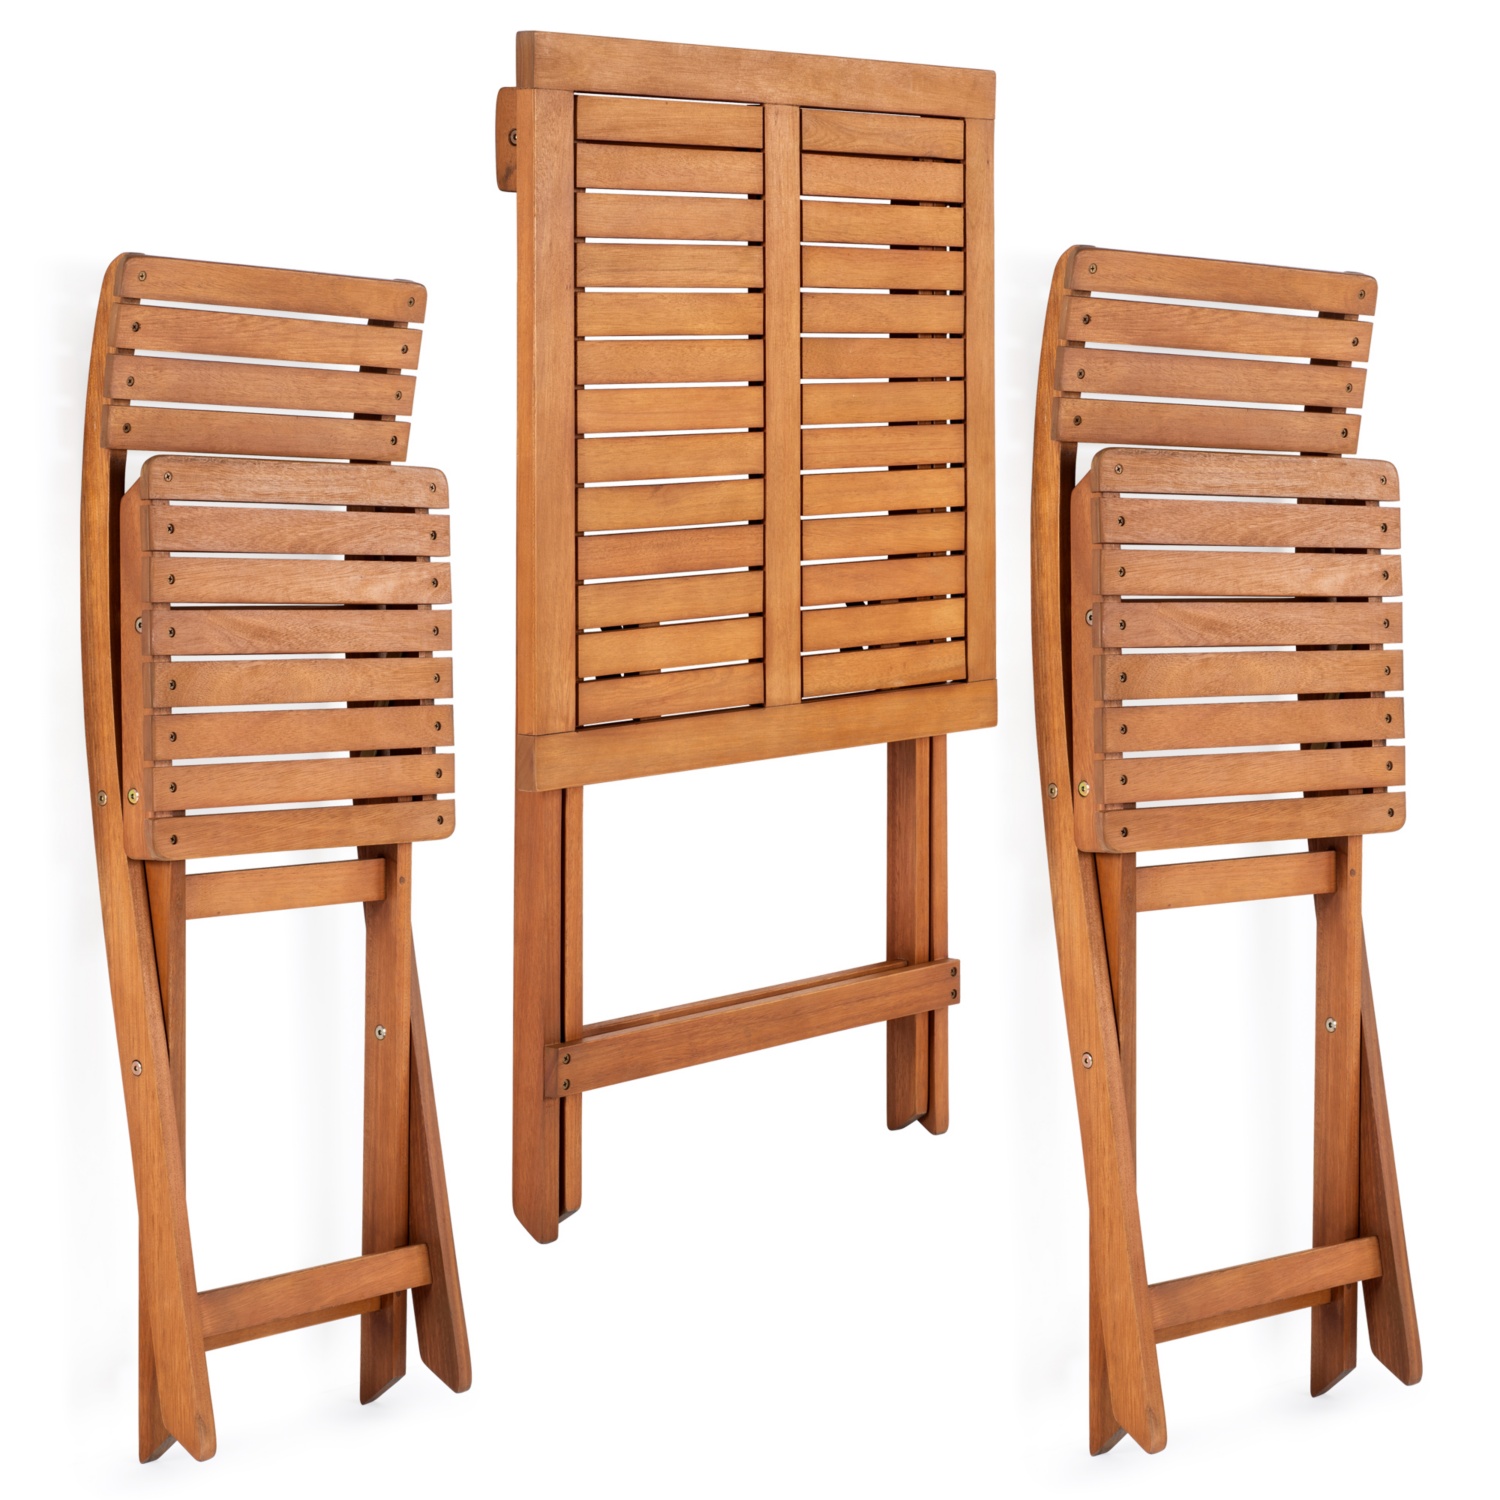 BELAVI Balkon-Set aus Holz, 3-teilig